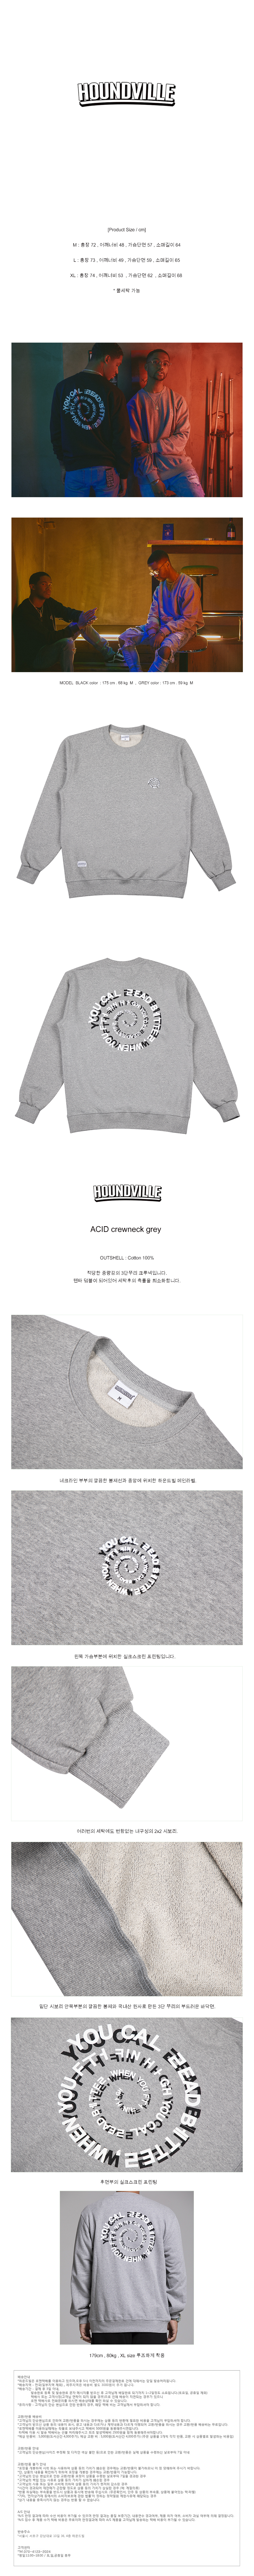 ACID crewneck grey.jpg